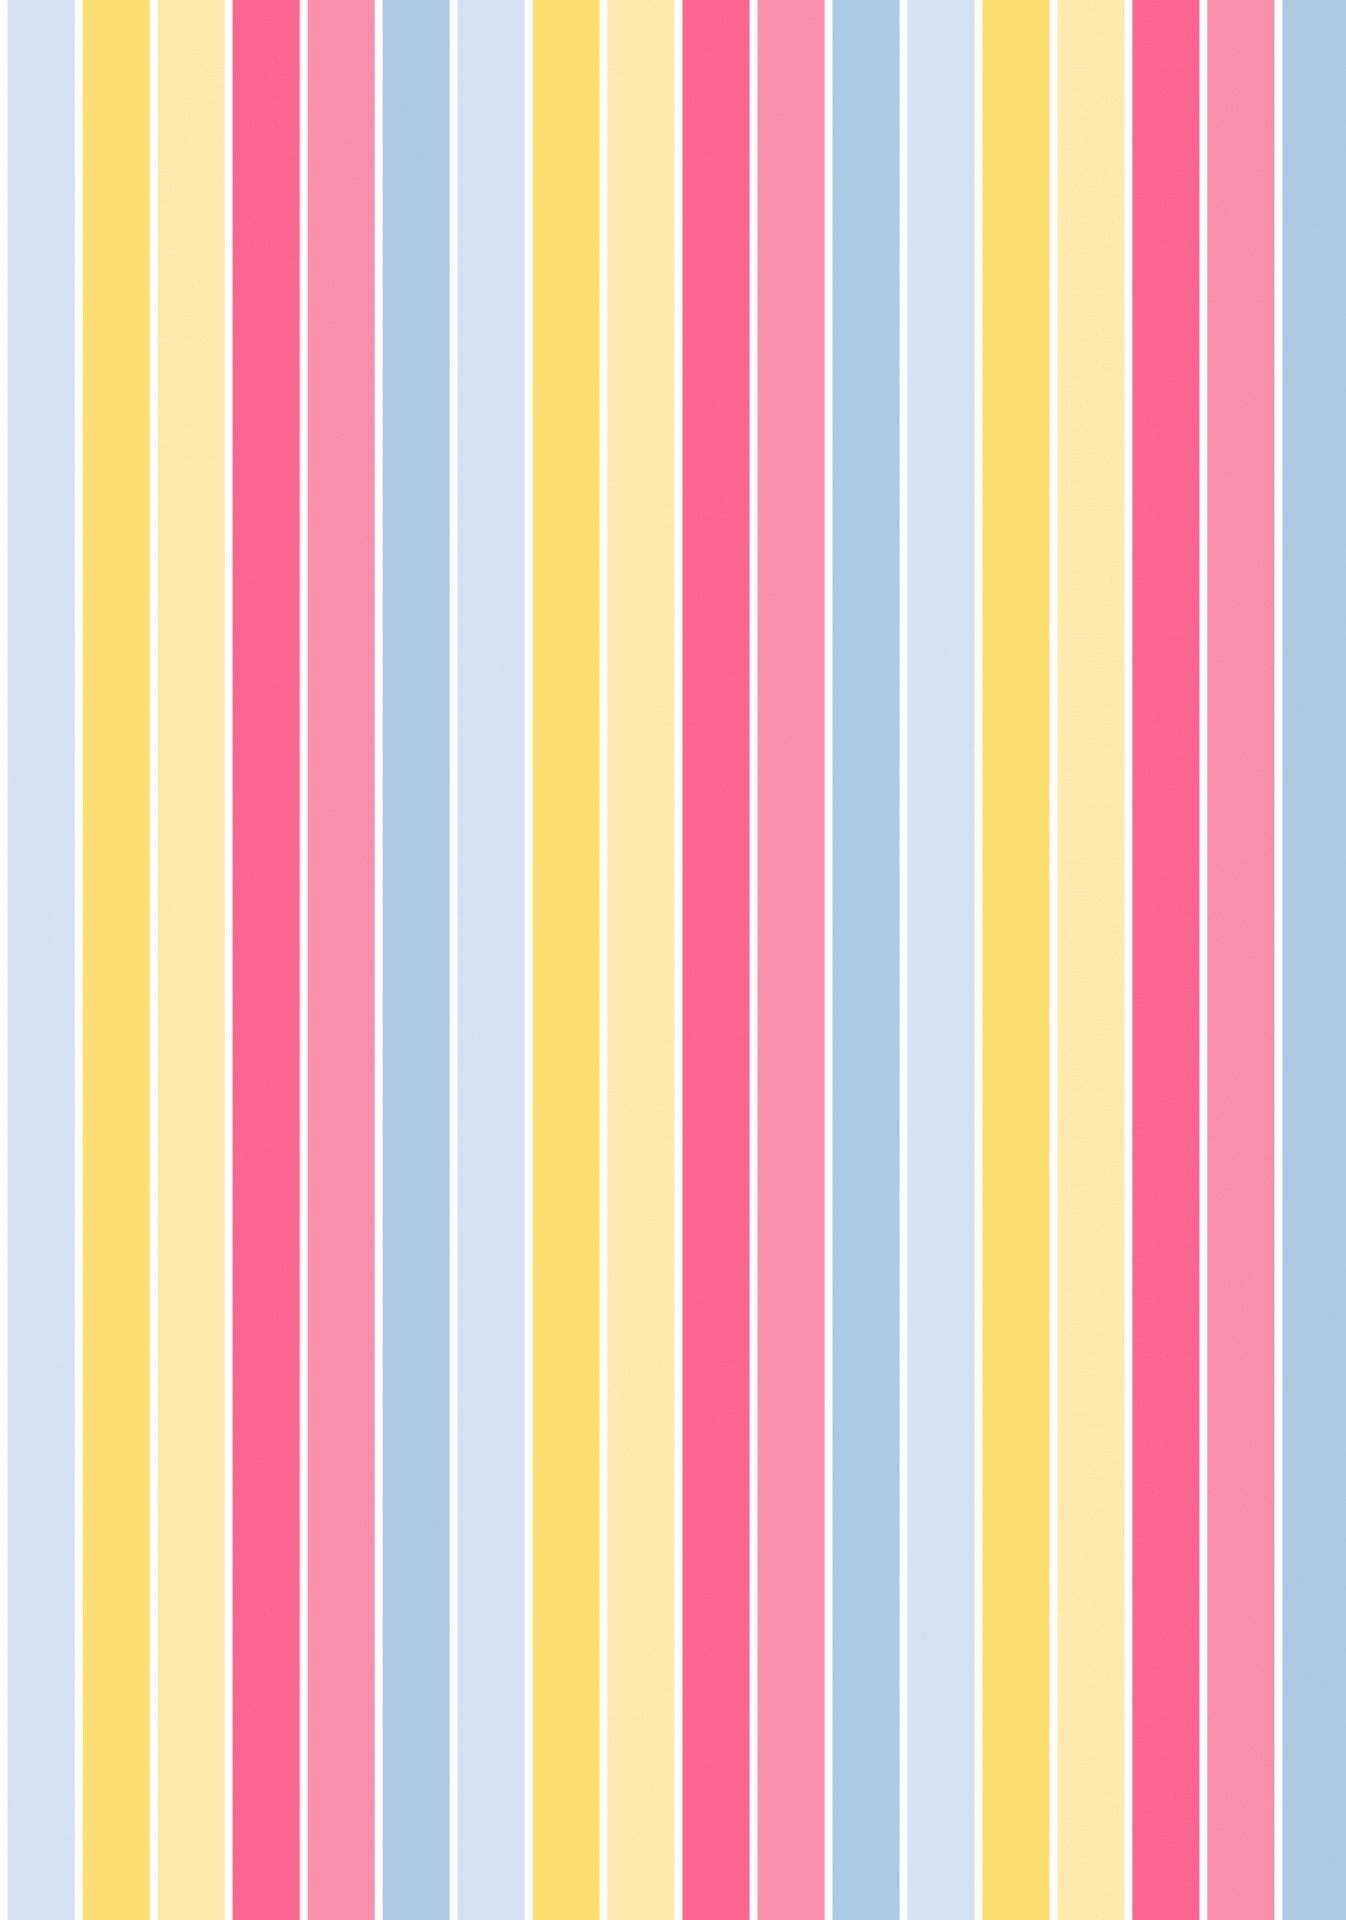 Stripes Striped Wallpaper Free Photo Stripes Background Pink